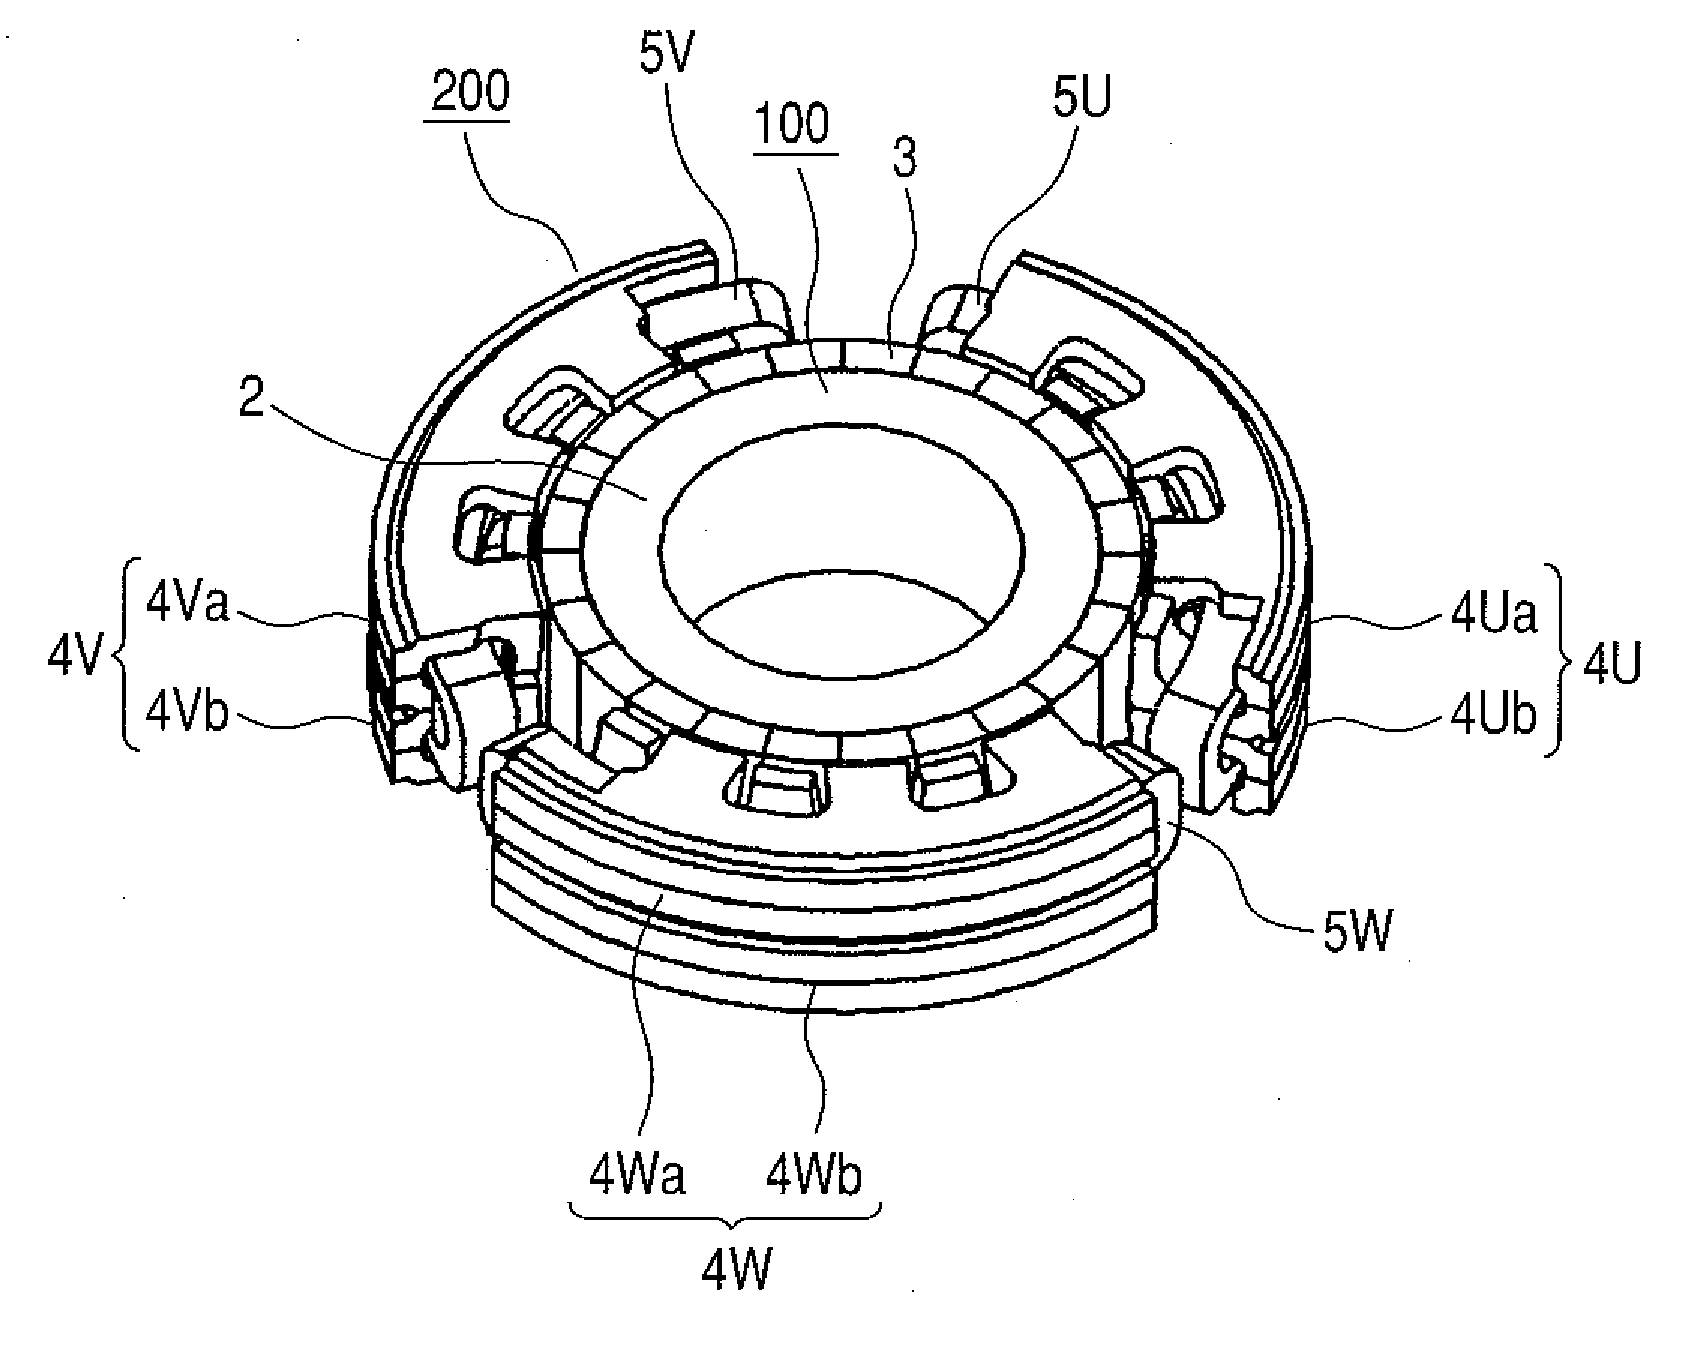 Permanent-magnet synchronous motor